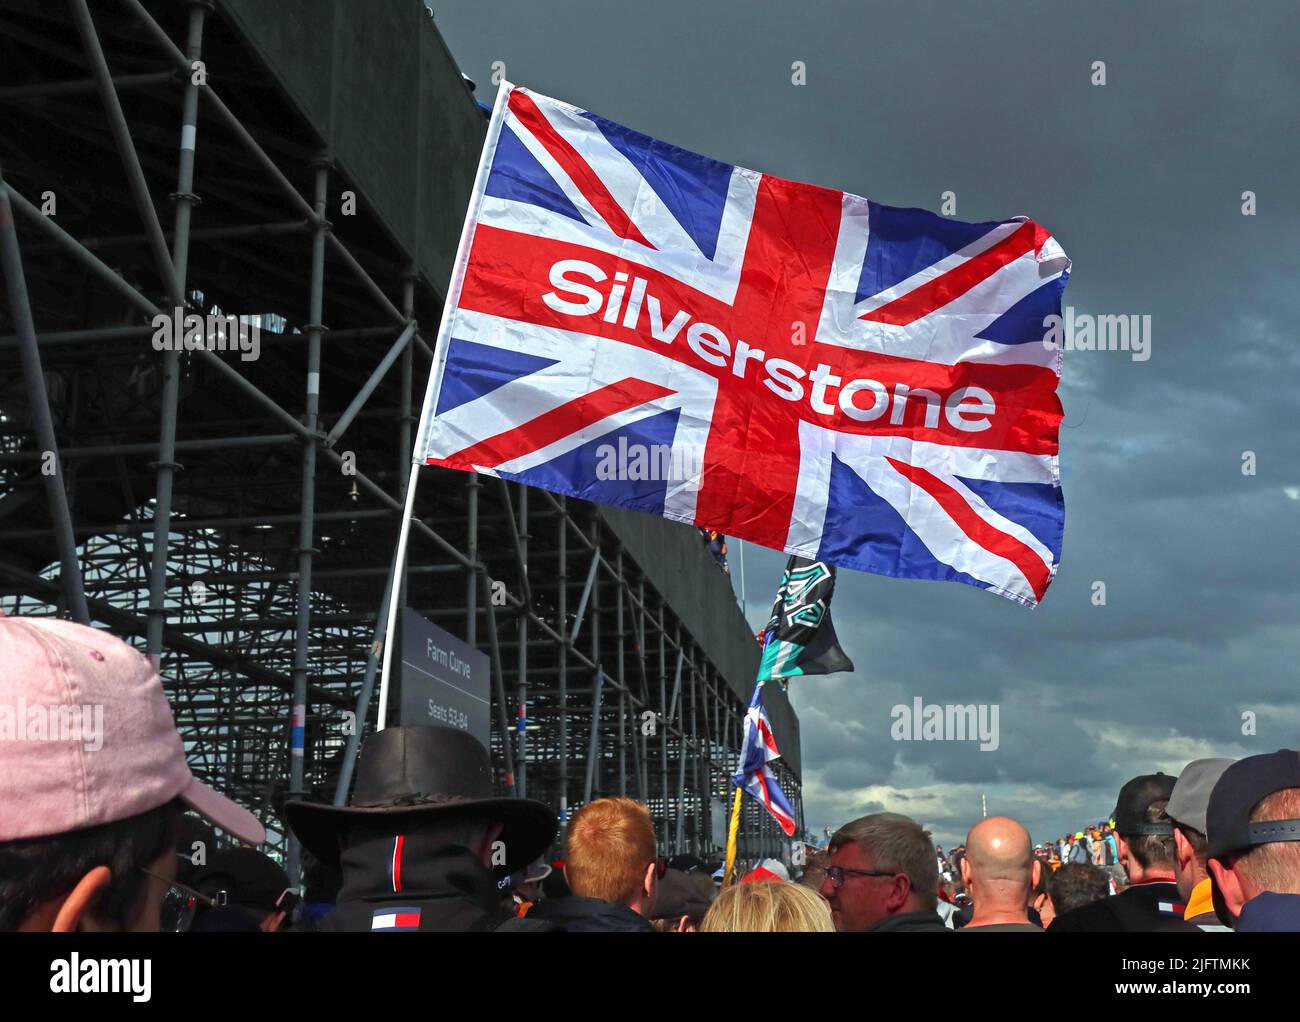 Silverstone British Union Jack Flag, Silverstone Circuit, Silverstone Village, Towcester, Northamptonshire, England, UK, NN12 8TN Stock Photo